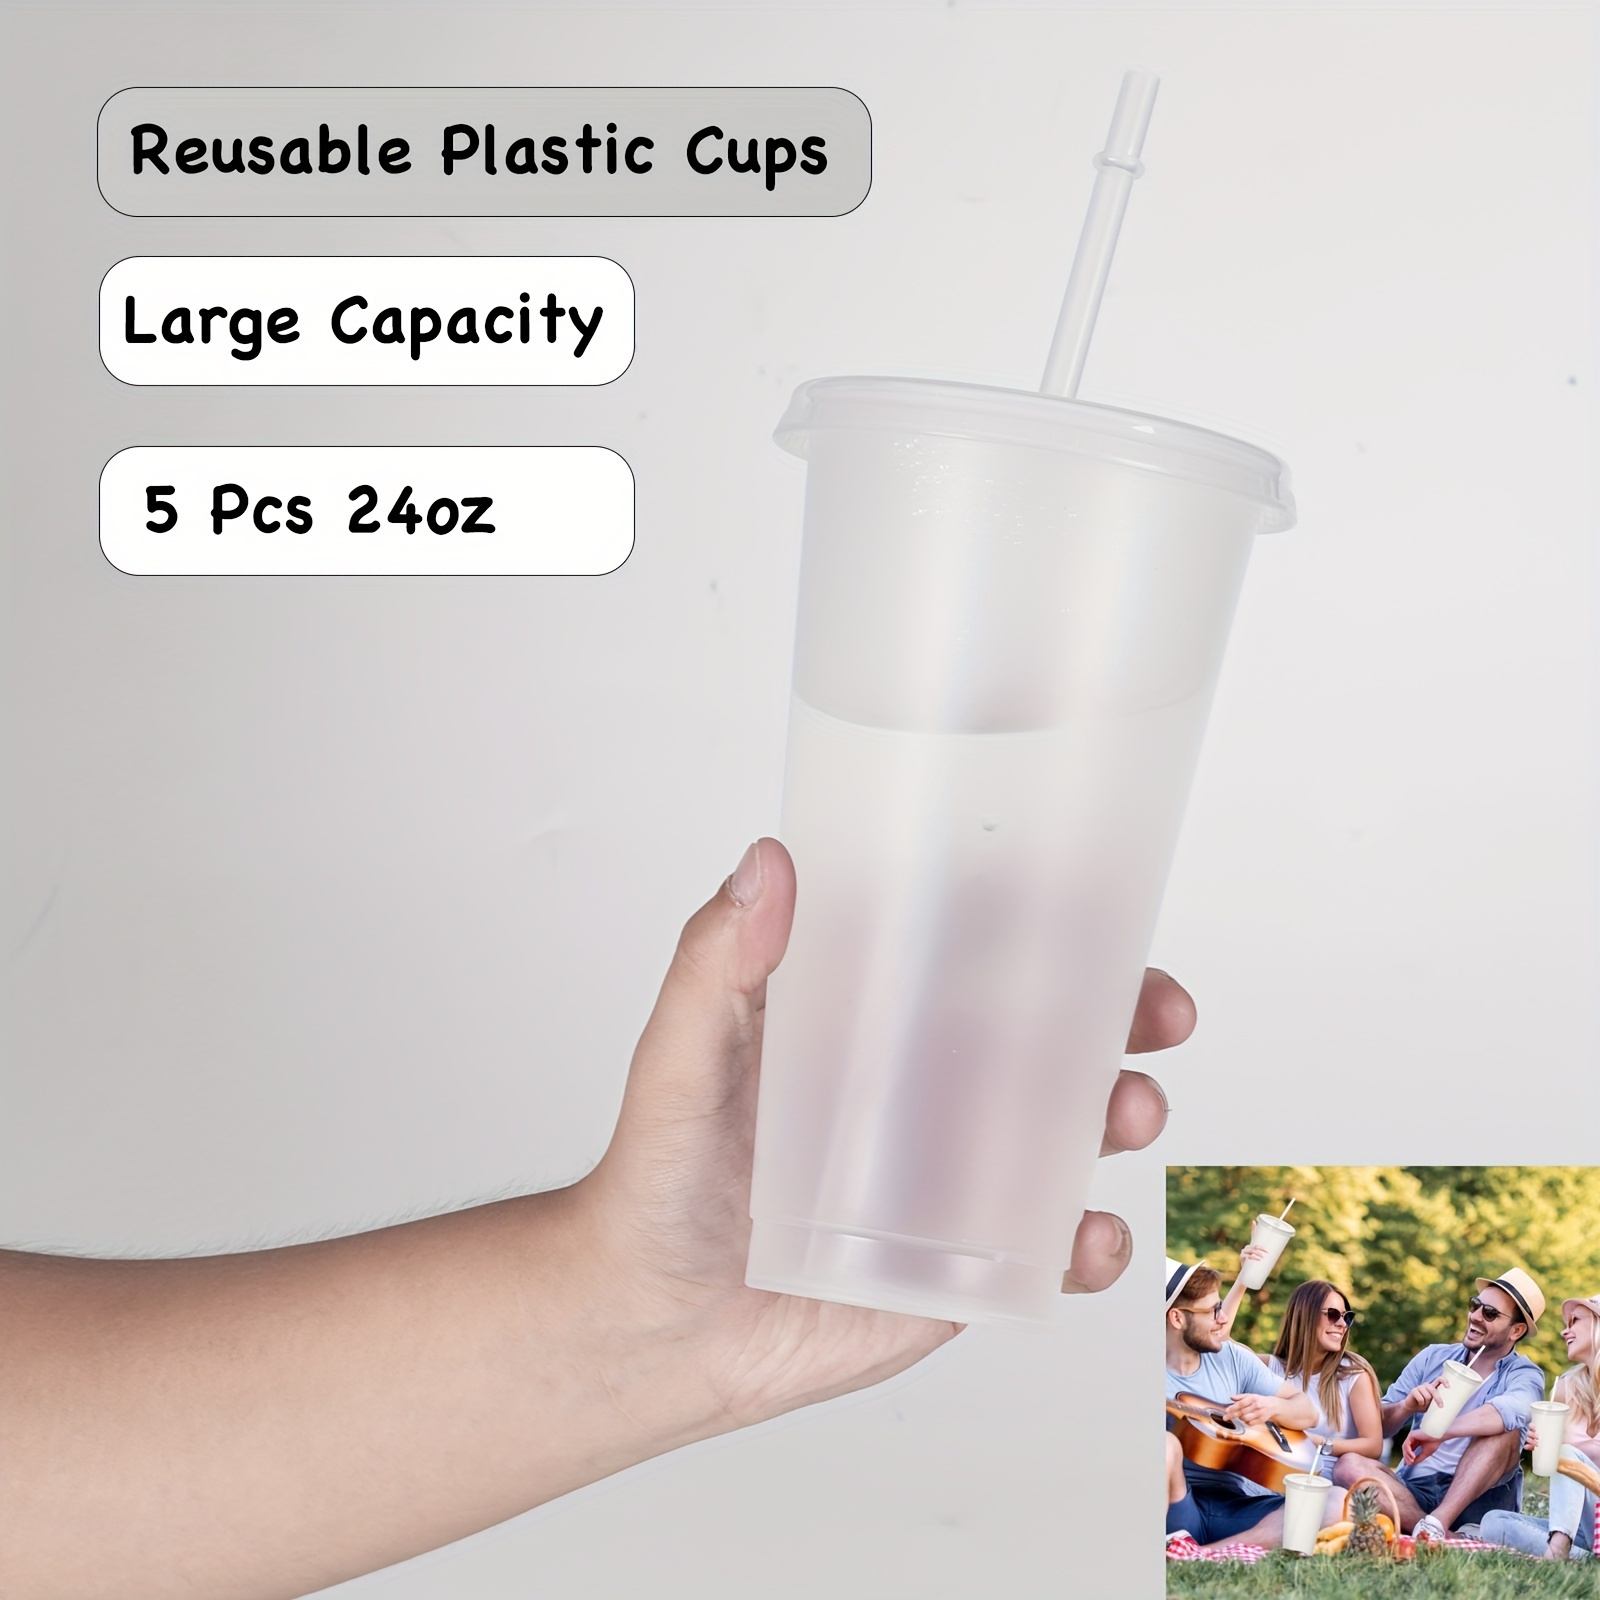 Reusable Plastic Tumblers with Lids & Straws - 9 Pcs 24oz Large